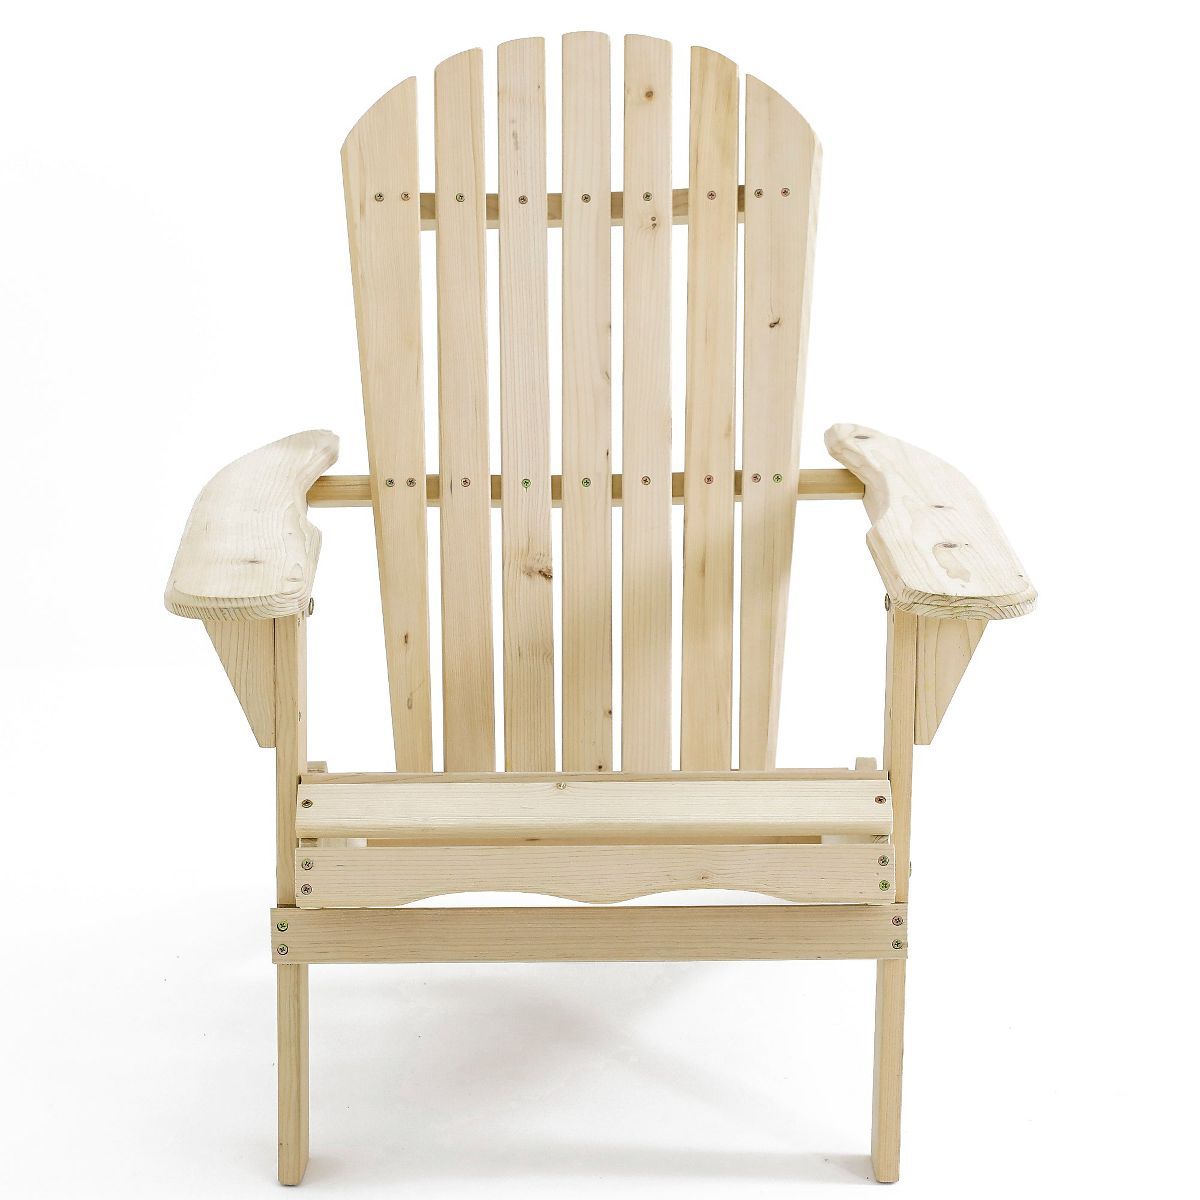 LuxenHome Unfinished Hemlock Wood Outdoor Adirondack Chair Brown | Target